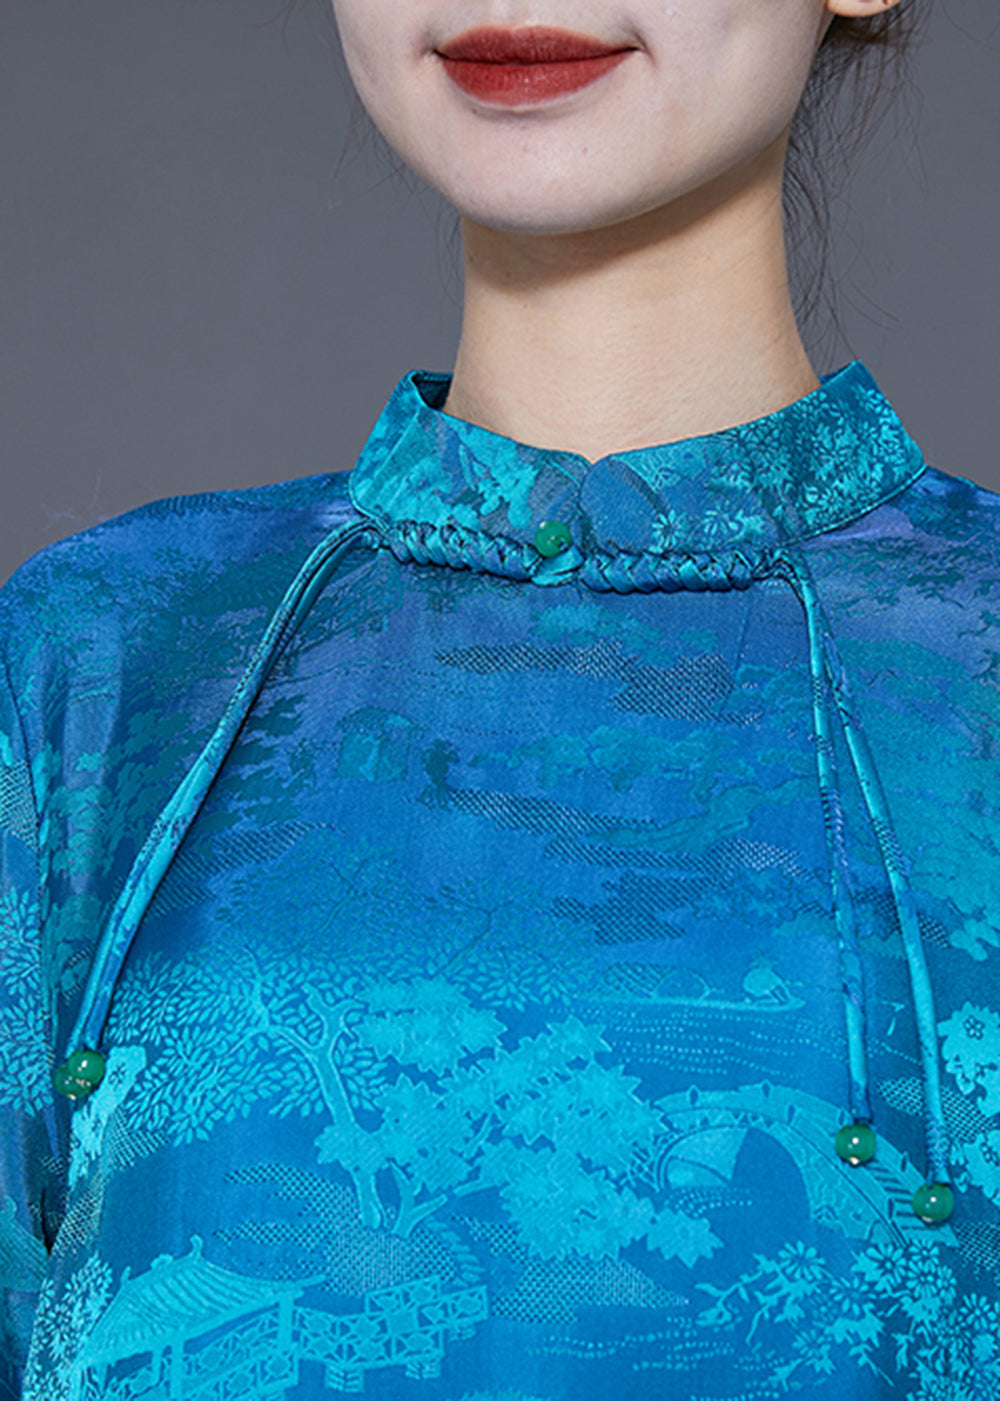 Boho Blue Mandarin Collar Print Tassel Silk Robe Dresses Summer LY5406 - fabuloryshop